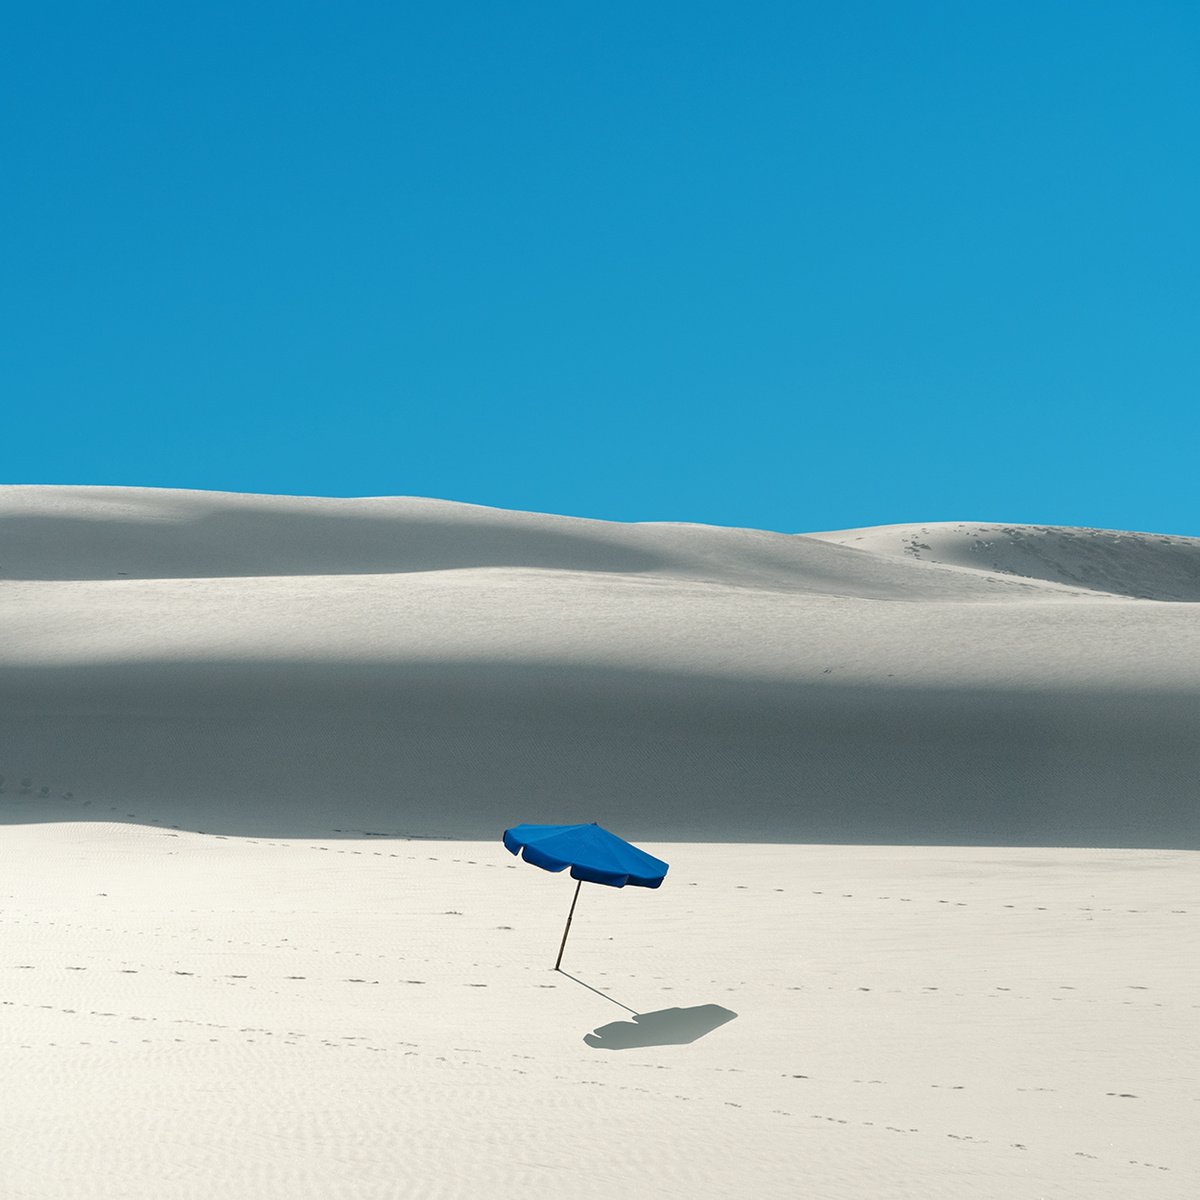 The blue umbrella on the dunes by Jacek Falmur